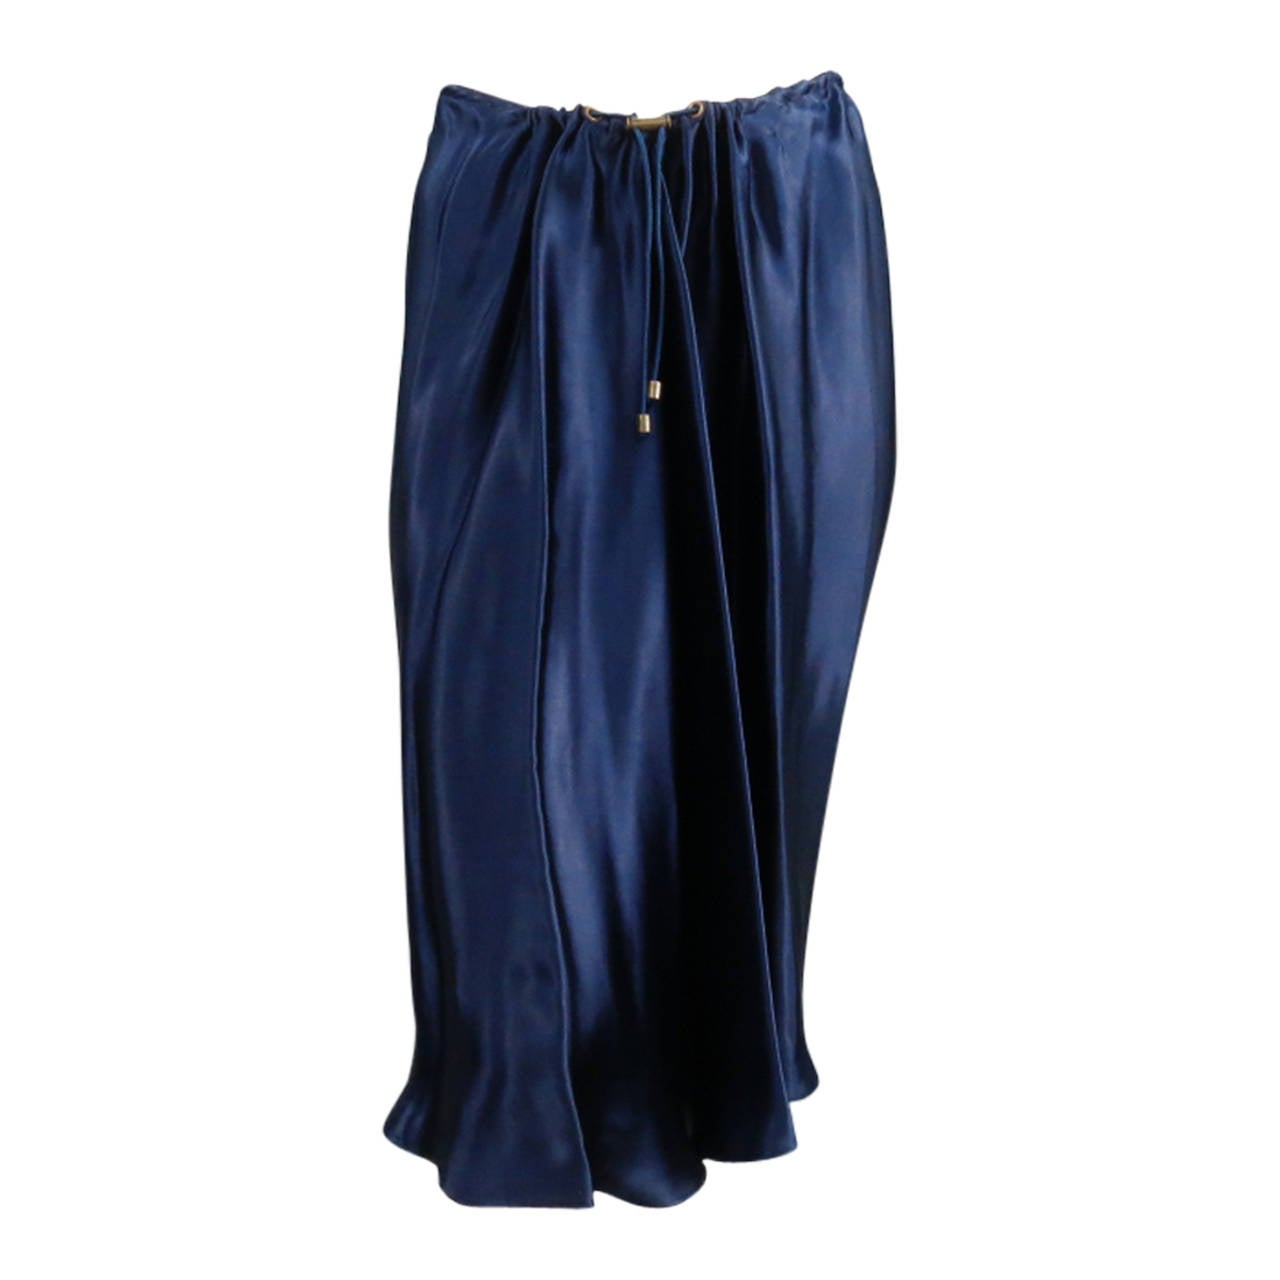 LANVIN Size 8 Navy Satin Elastic Drawstring Cord Skirt